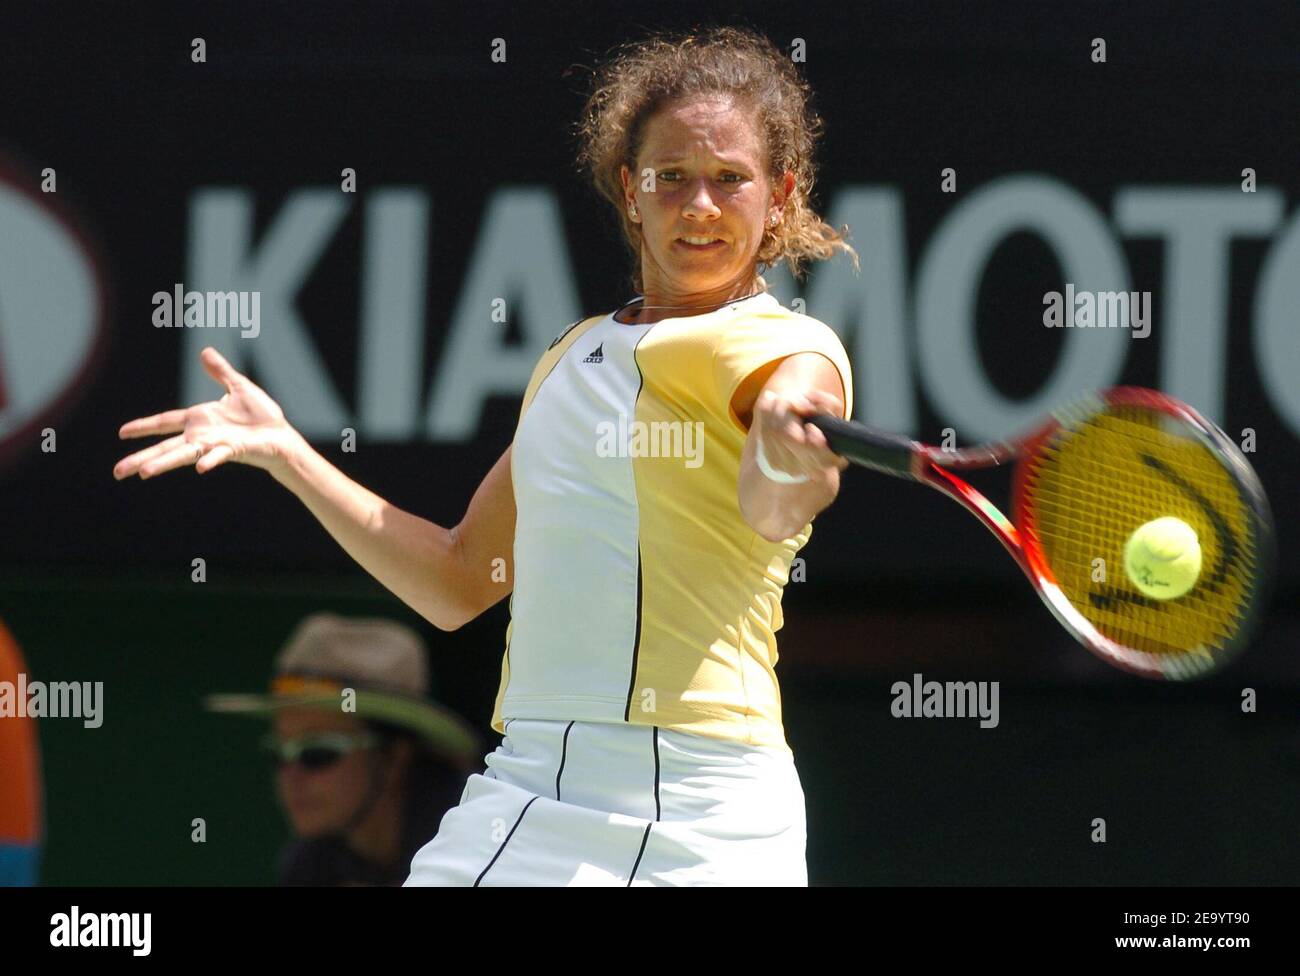 Swiss tennis player Patty Schnyder won 6-7, 7-6, 6-2 against Russian player  Elena